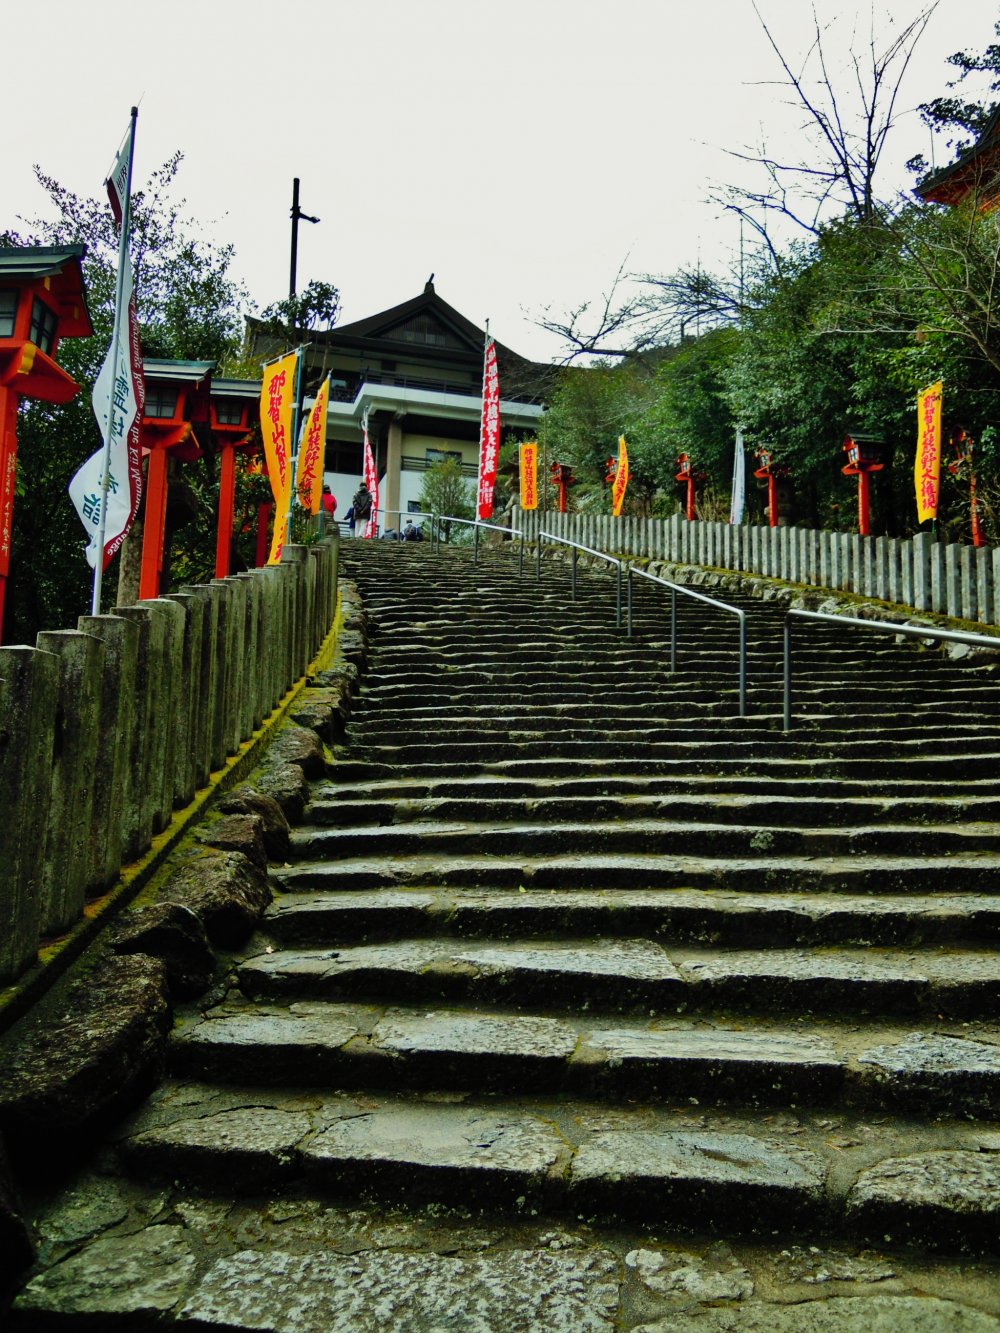 The long flight of steps towards the shrine.